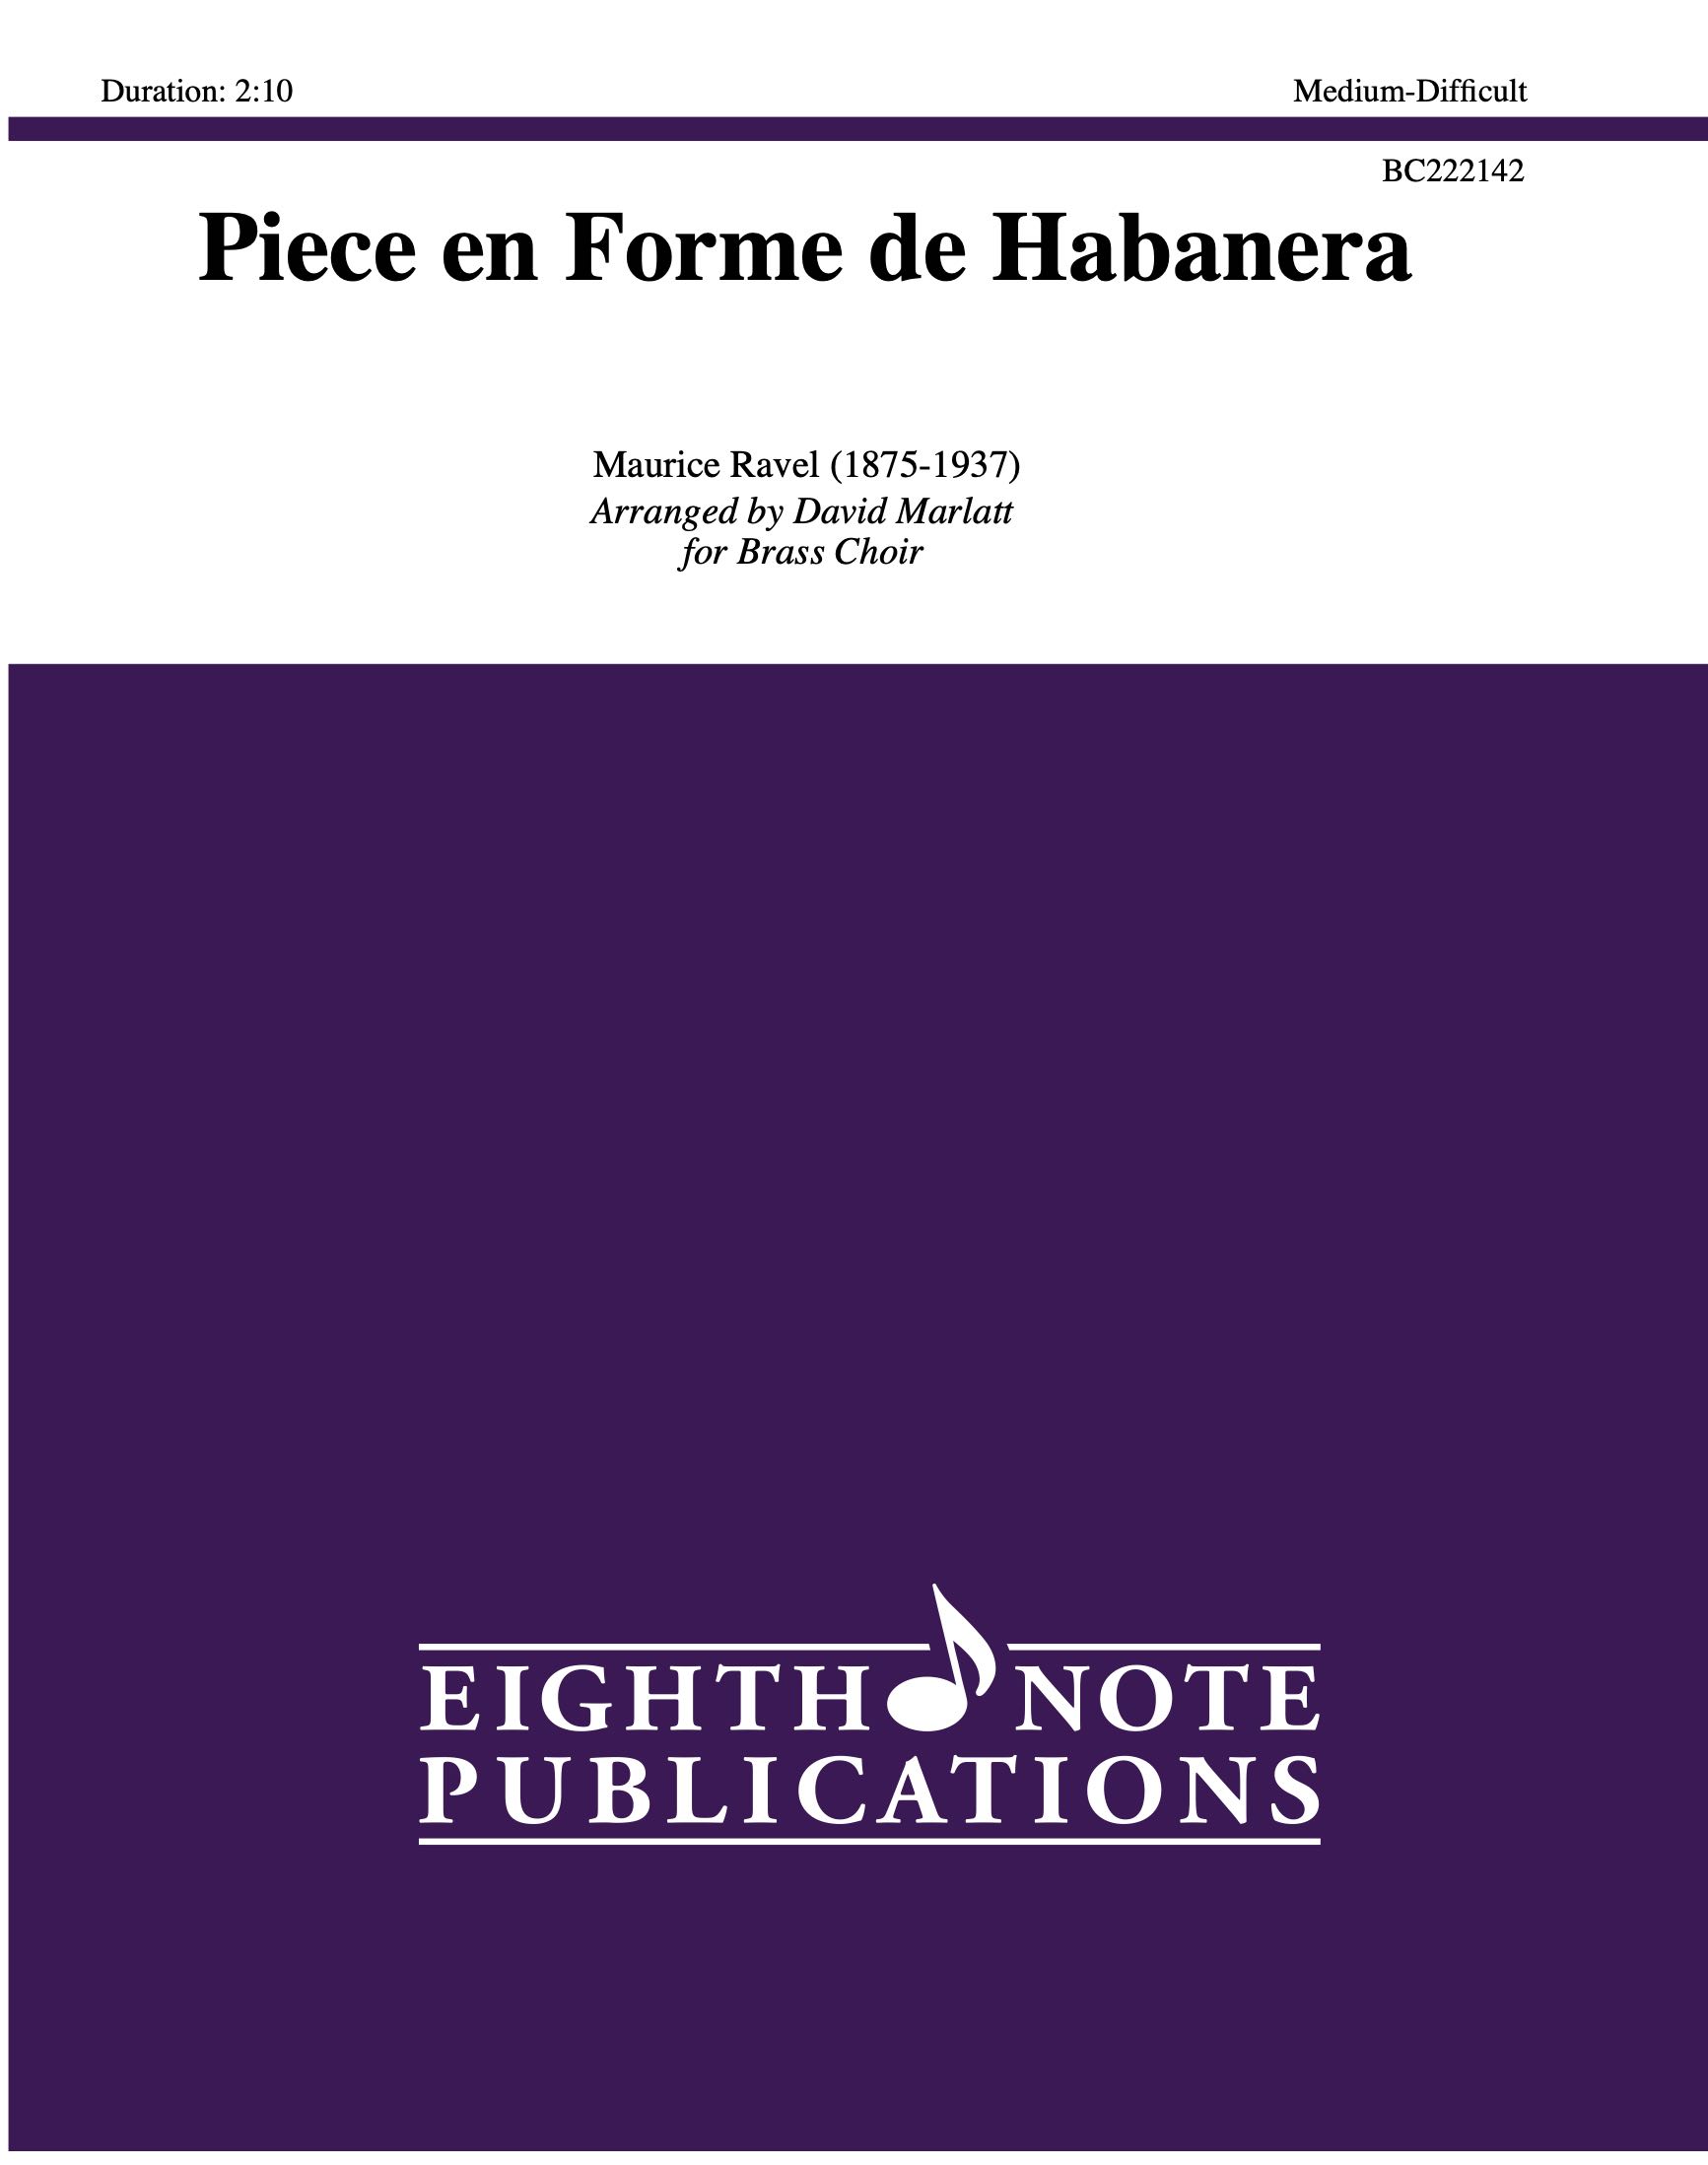 Piece en Forme de Habanera - Maurice Ravel